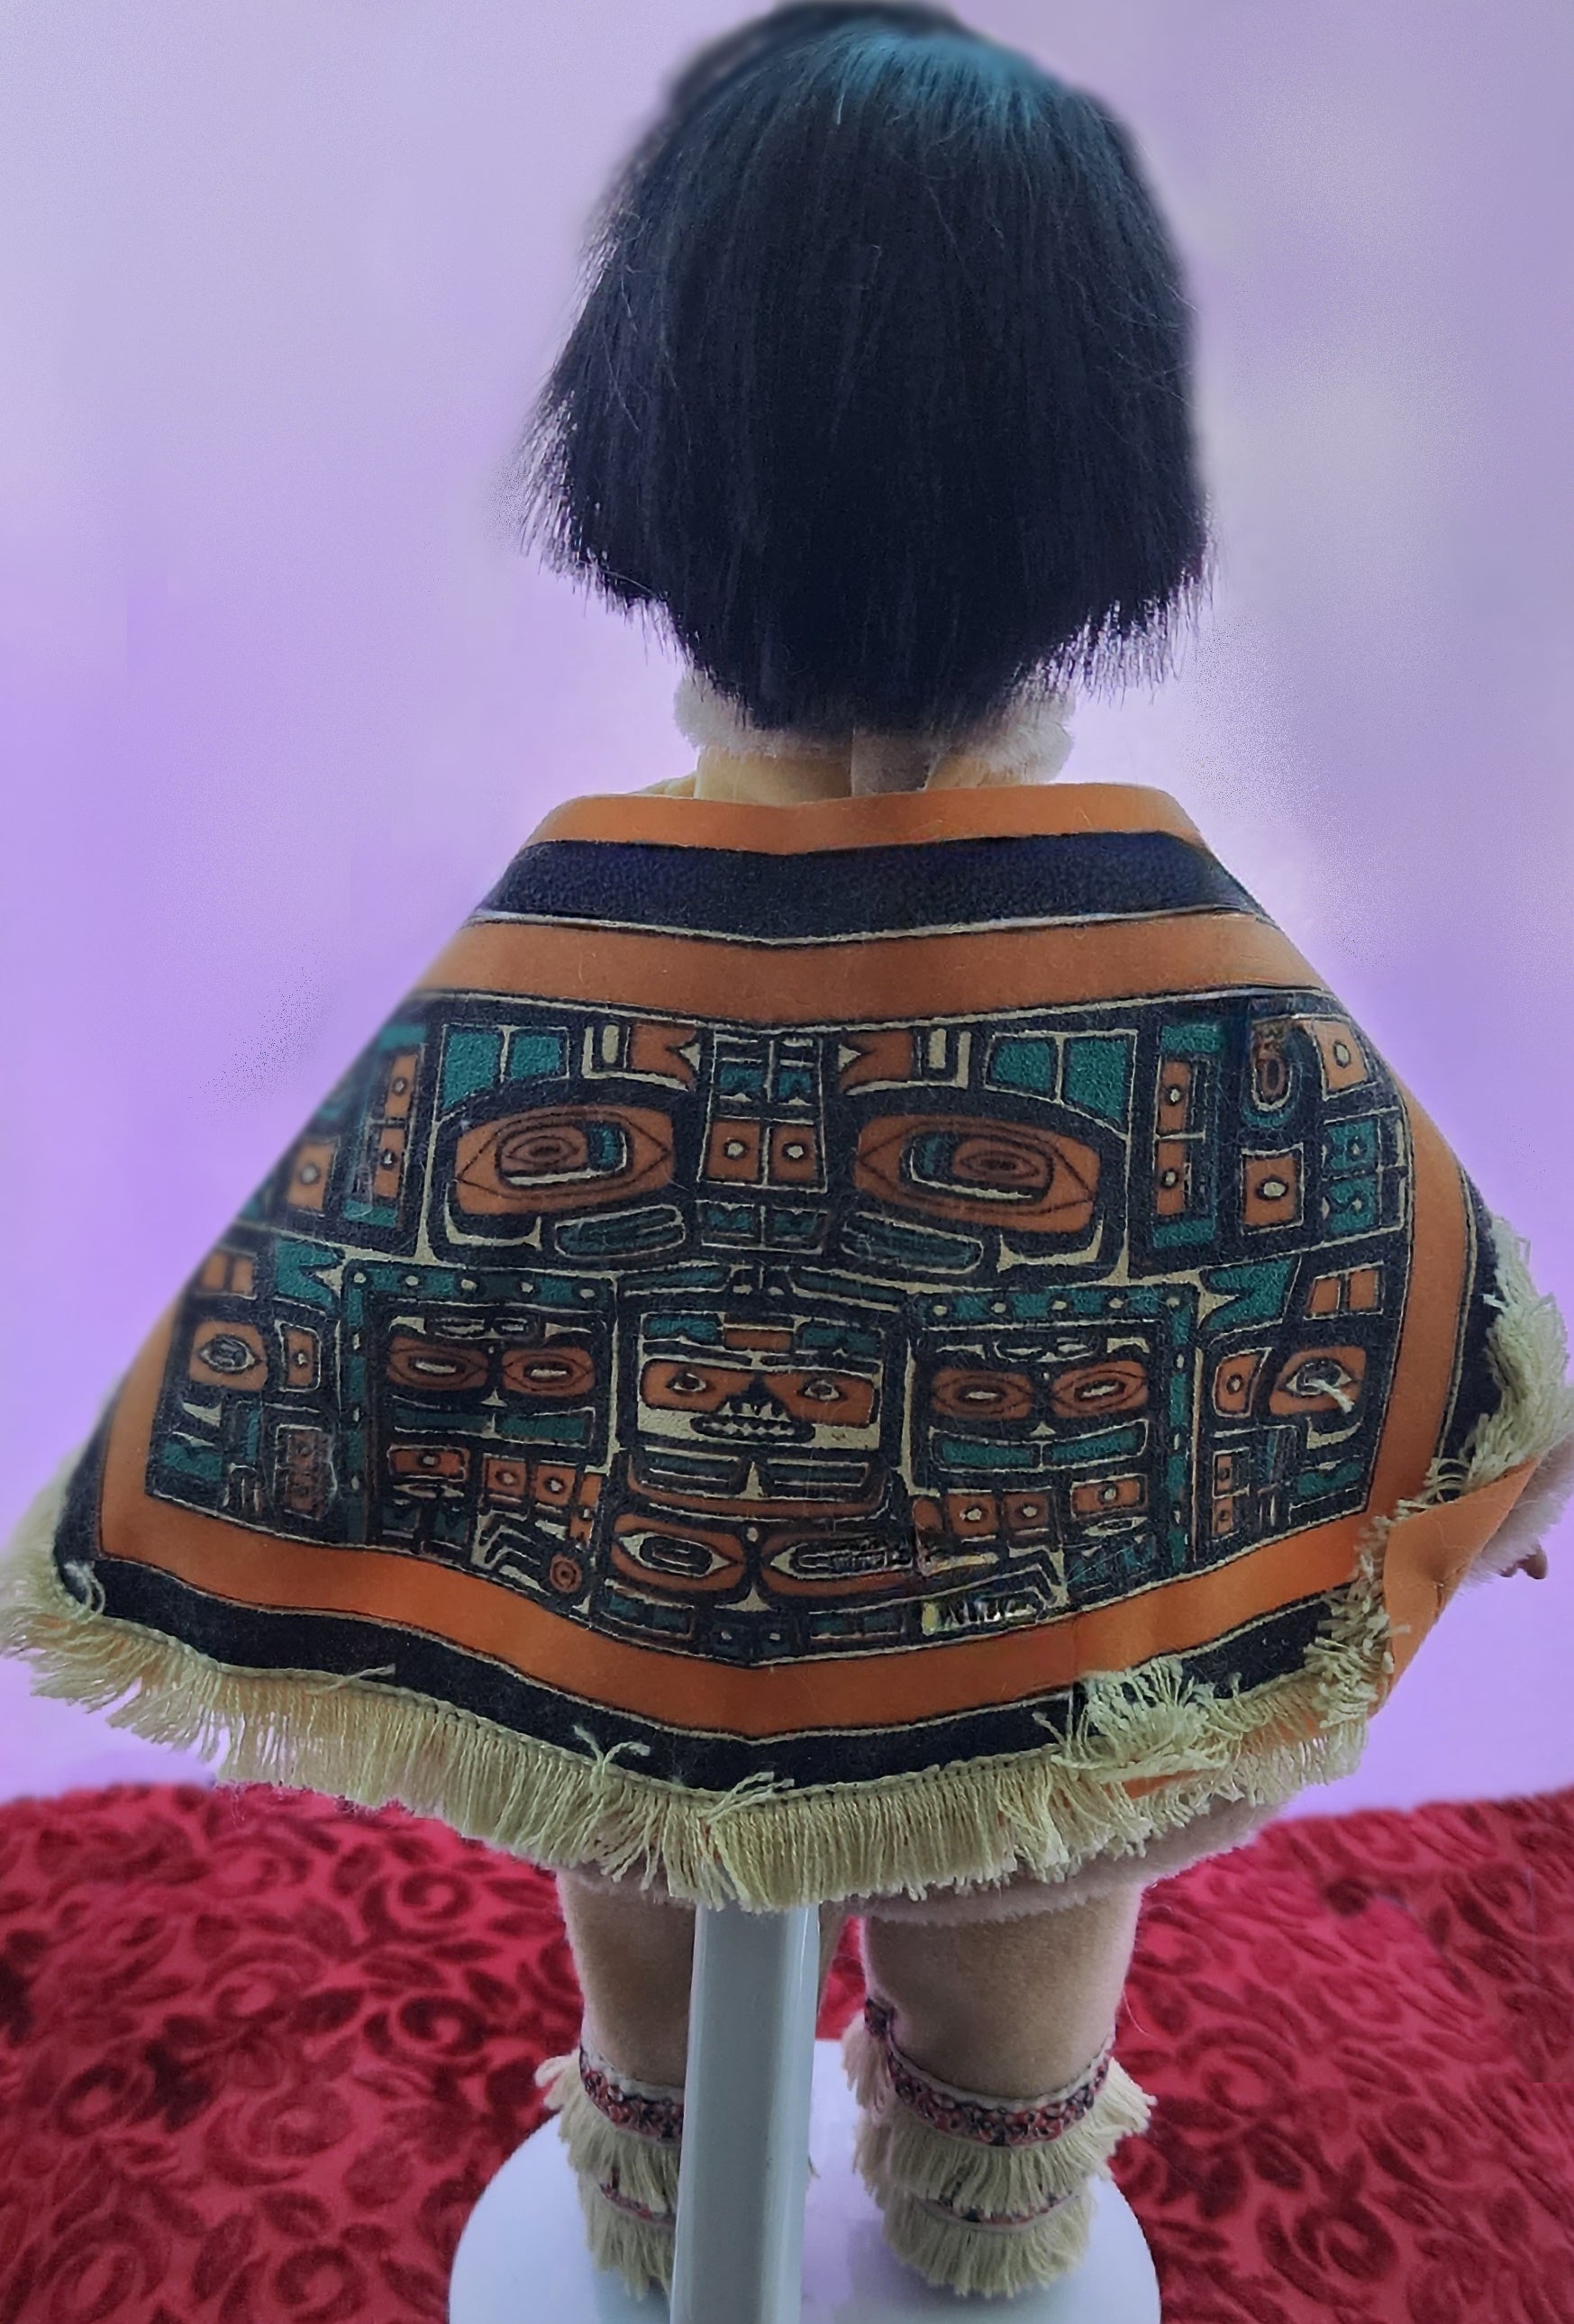 Nuka - Native American Health & Healing Spirit Doll